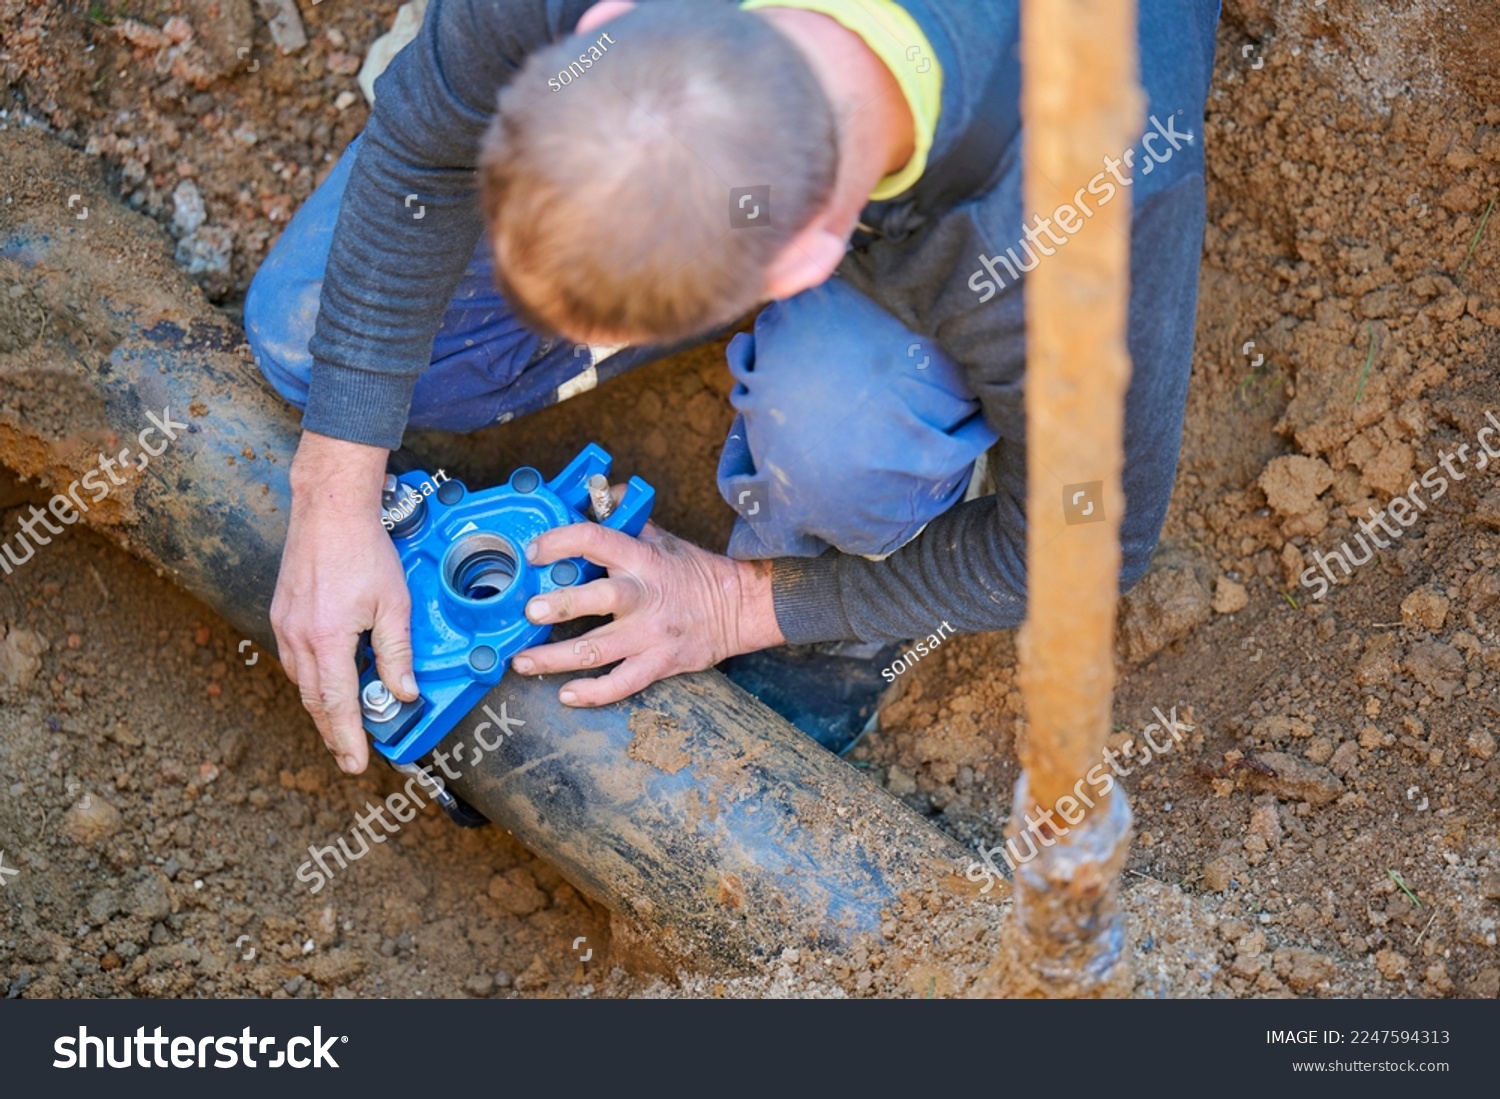 Construction worker, repairing a broken water pipe.
Construction site with new Water Pipes in the ground. Plumber work repair water line connect. #2247594313